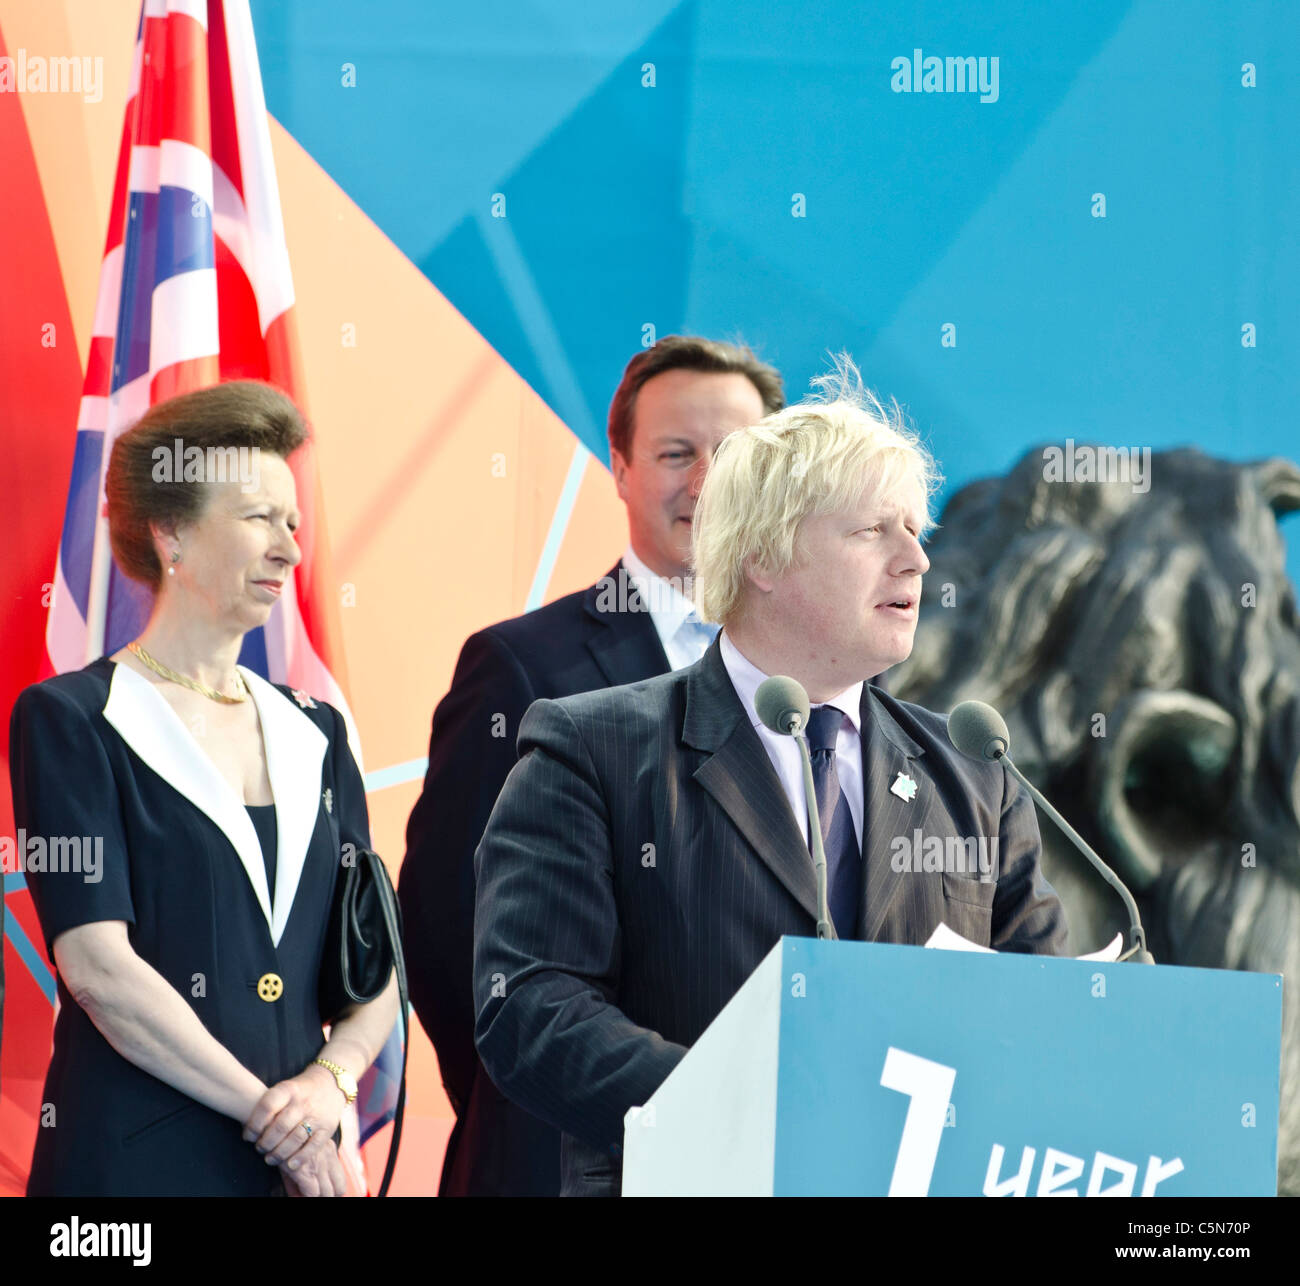 Bürgermeister Boris Johnson London Princess Royal, Prinzessin Anne, David Cameron "1 Jahr vor" London 2012 Olympics Trafalgar Square Stockfoto